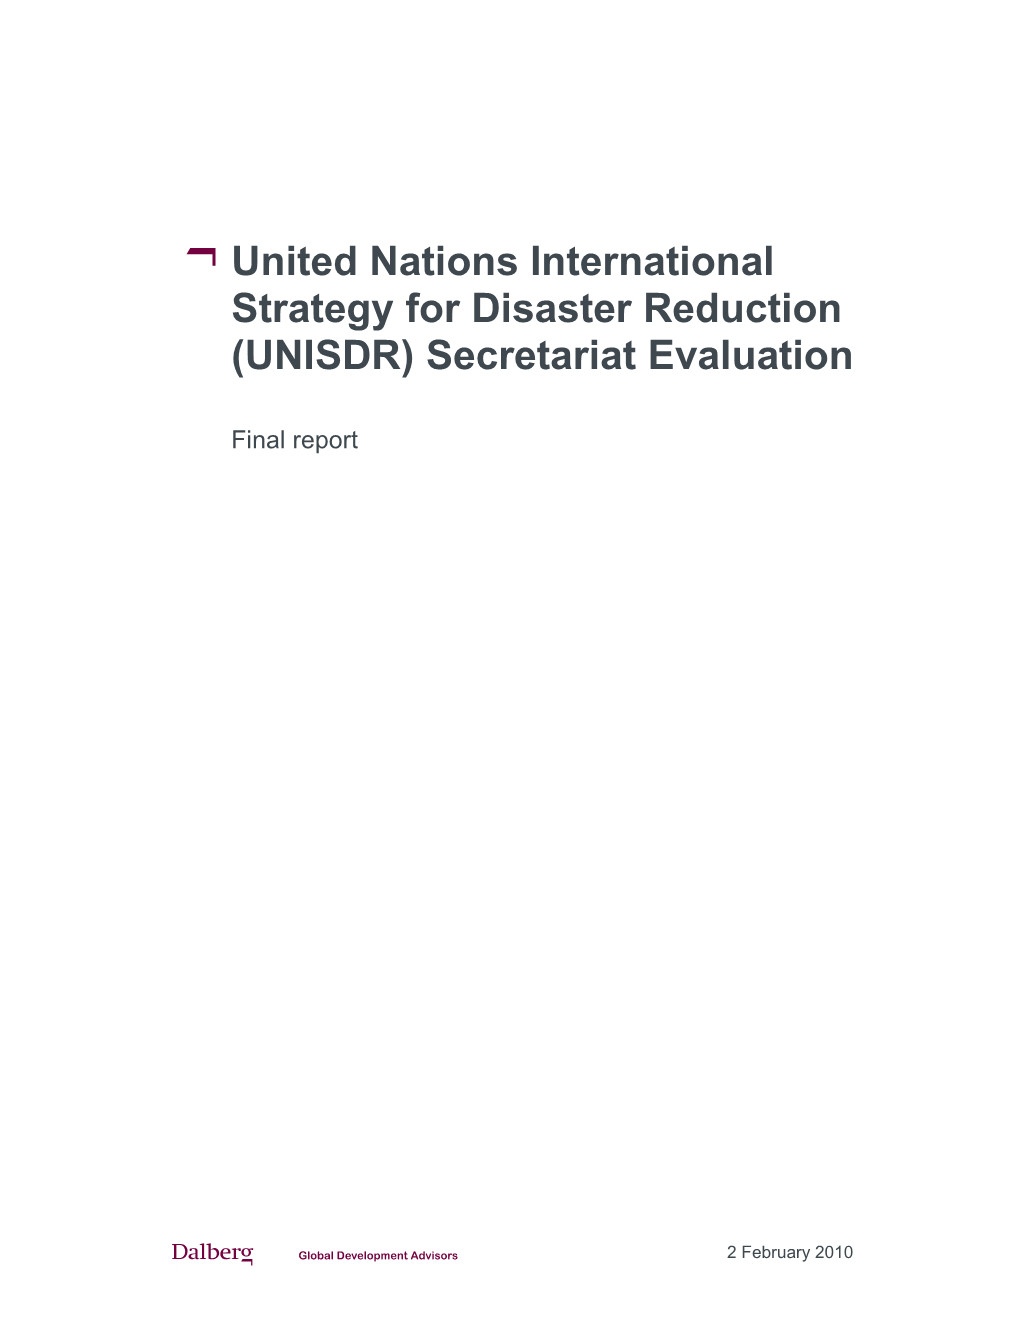 United Nations International Strategy for Disaster Reduction (UNISDR) Secretariat Evaluation